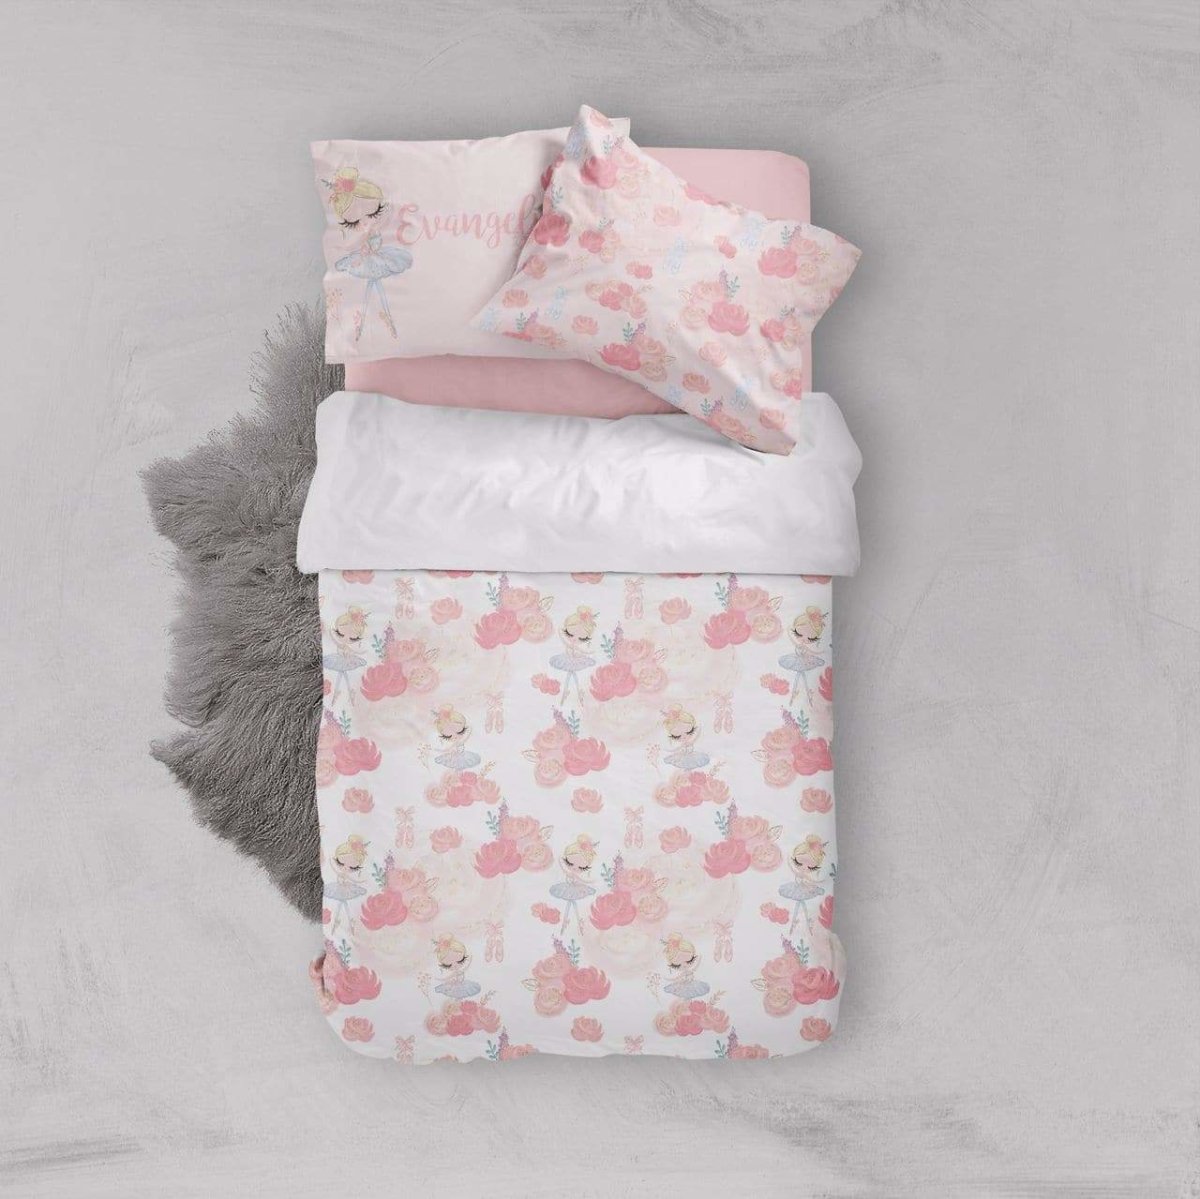 Ballerina Kids Bedding Set (Comforter or Duvet Cover) - Ballerina Blooms, text,